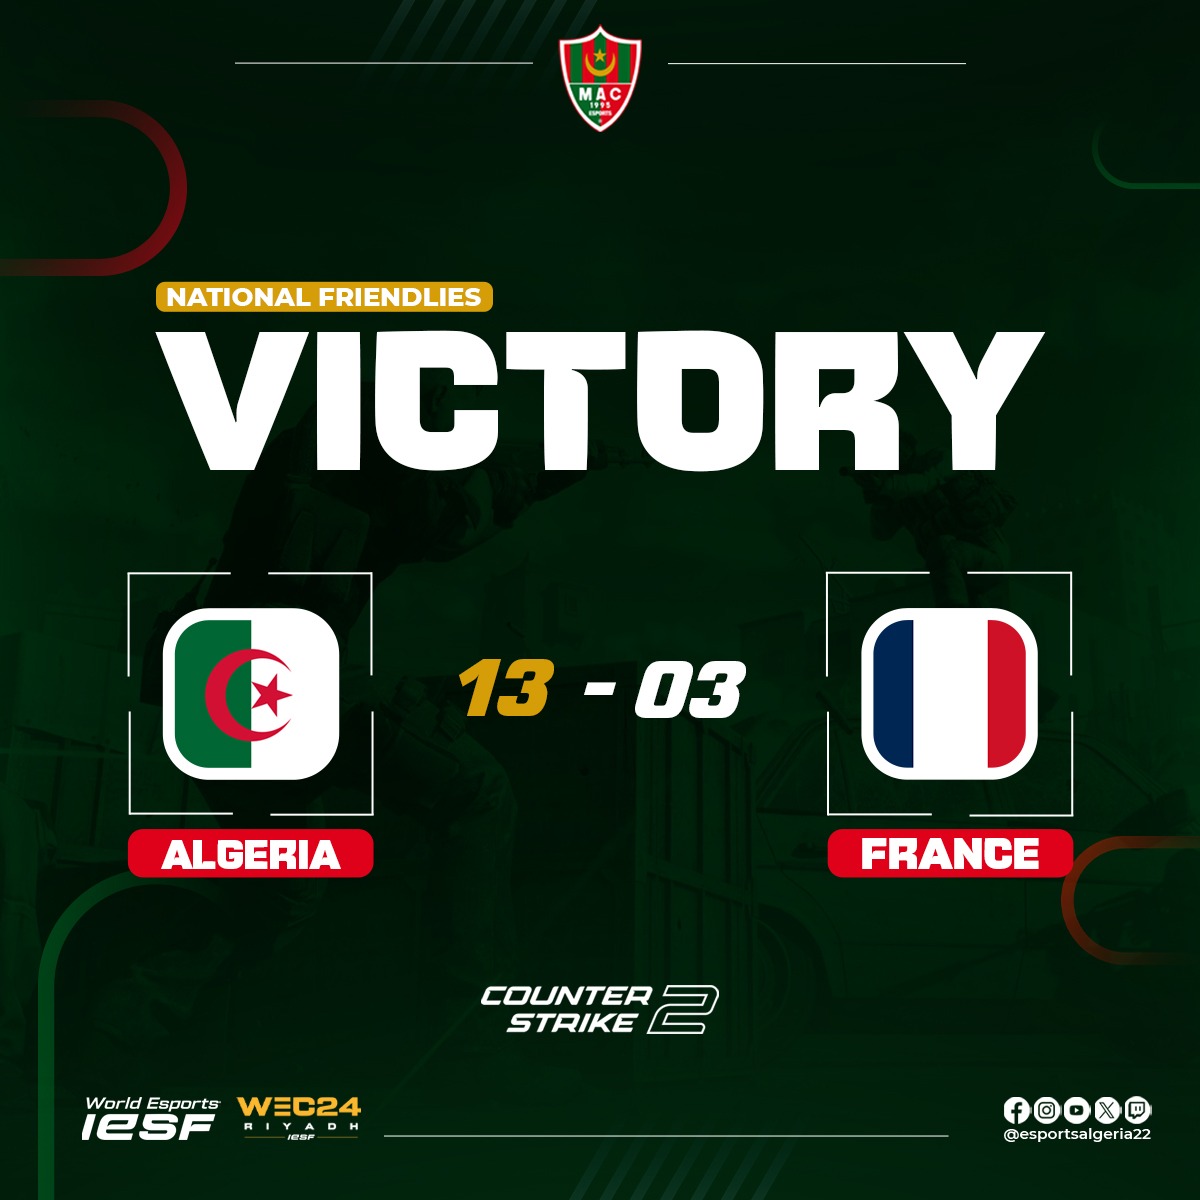 Our CS2 match against France has concluded. Great effort from both teams 👏

لقد انتهت مباراة CS2 ضد فرنسا. جهد رائع من كلا الفريقين 👏

#TeamCS2 #FriendlyMatch #CS2vsFrance #WEC24 #IESF #dz #Algeria